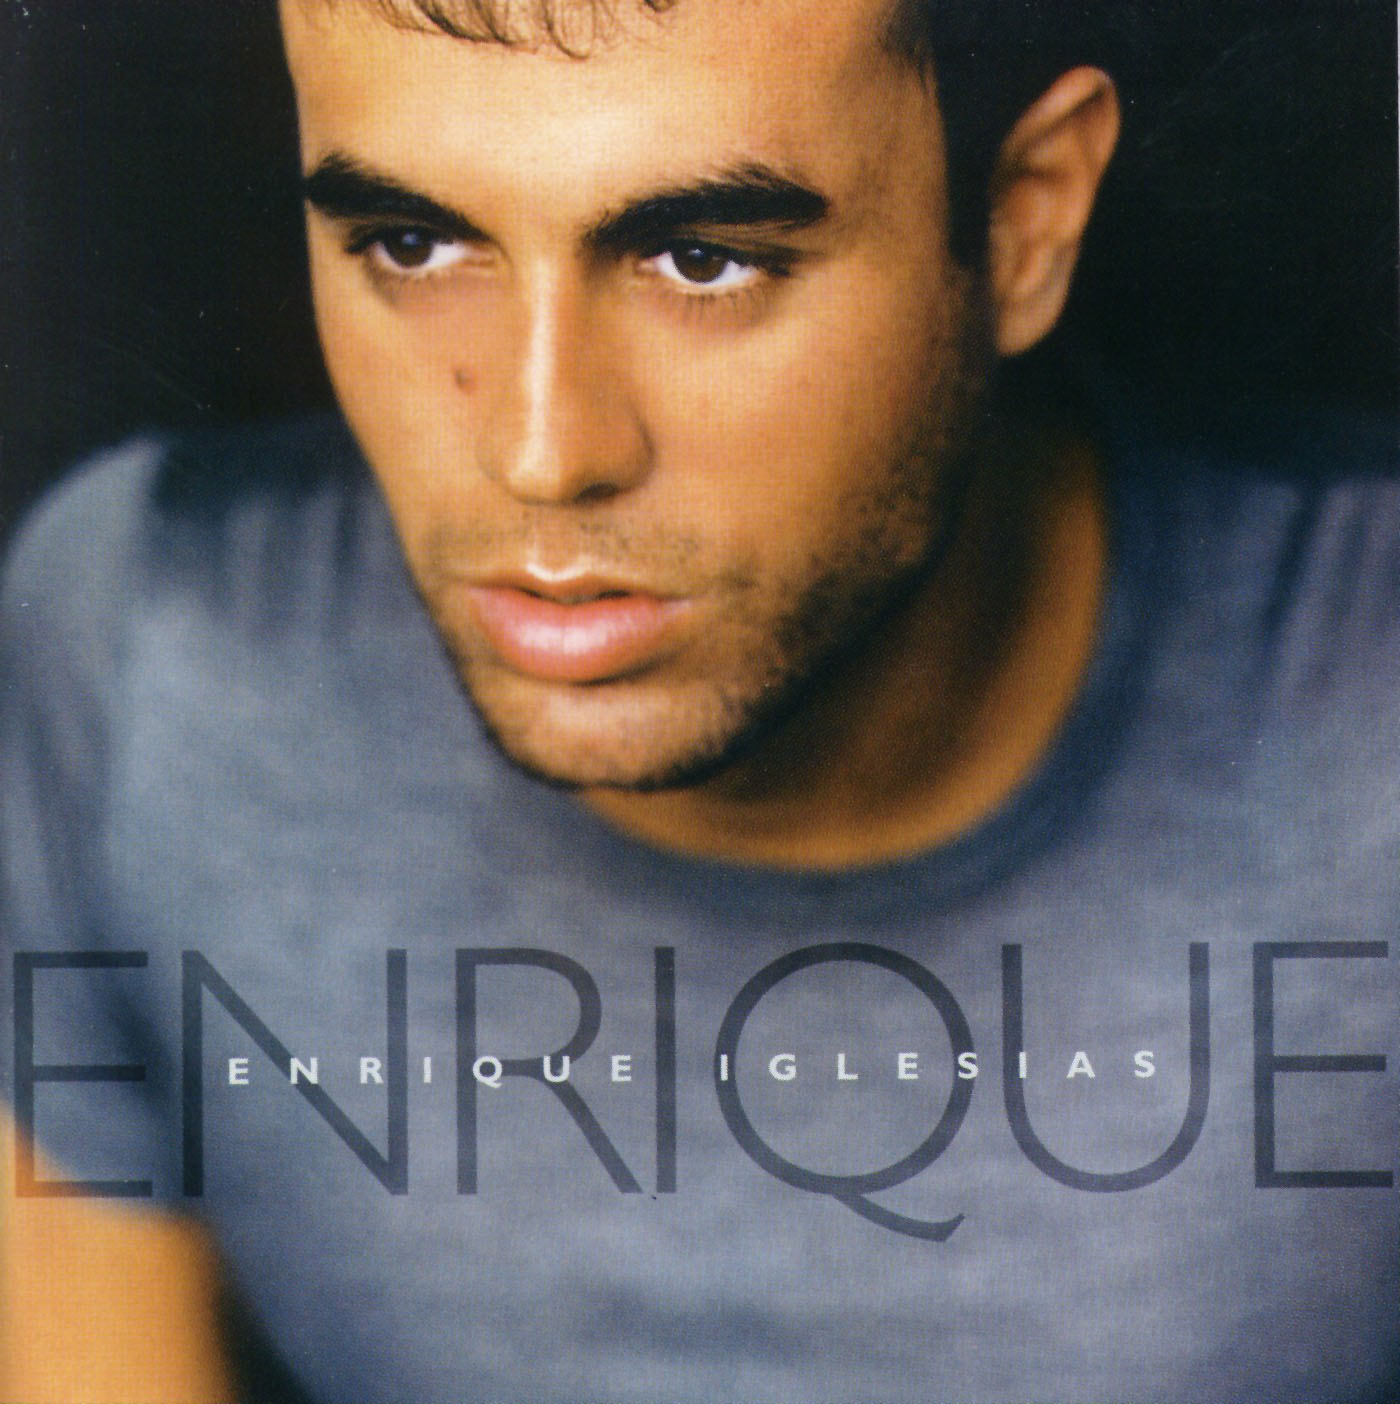 Release group “Enrique” by Enrique Iglesias - MusicBrainz